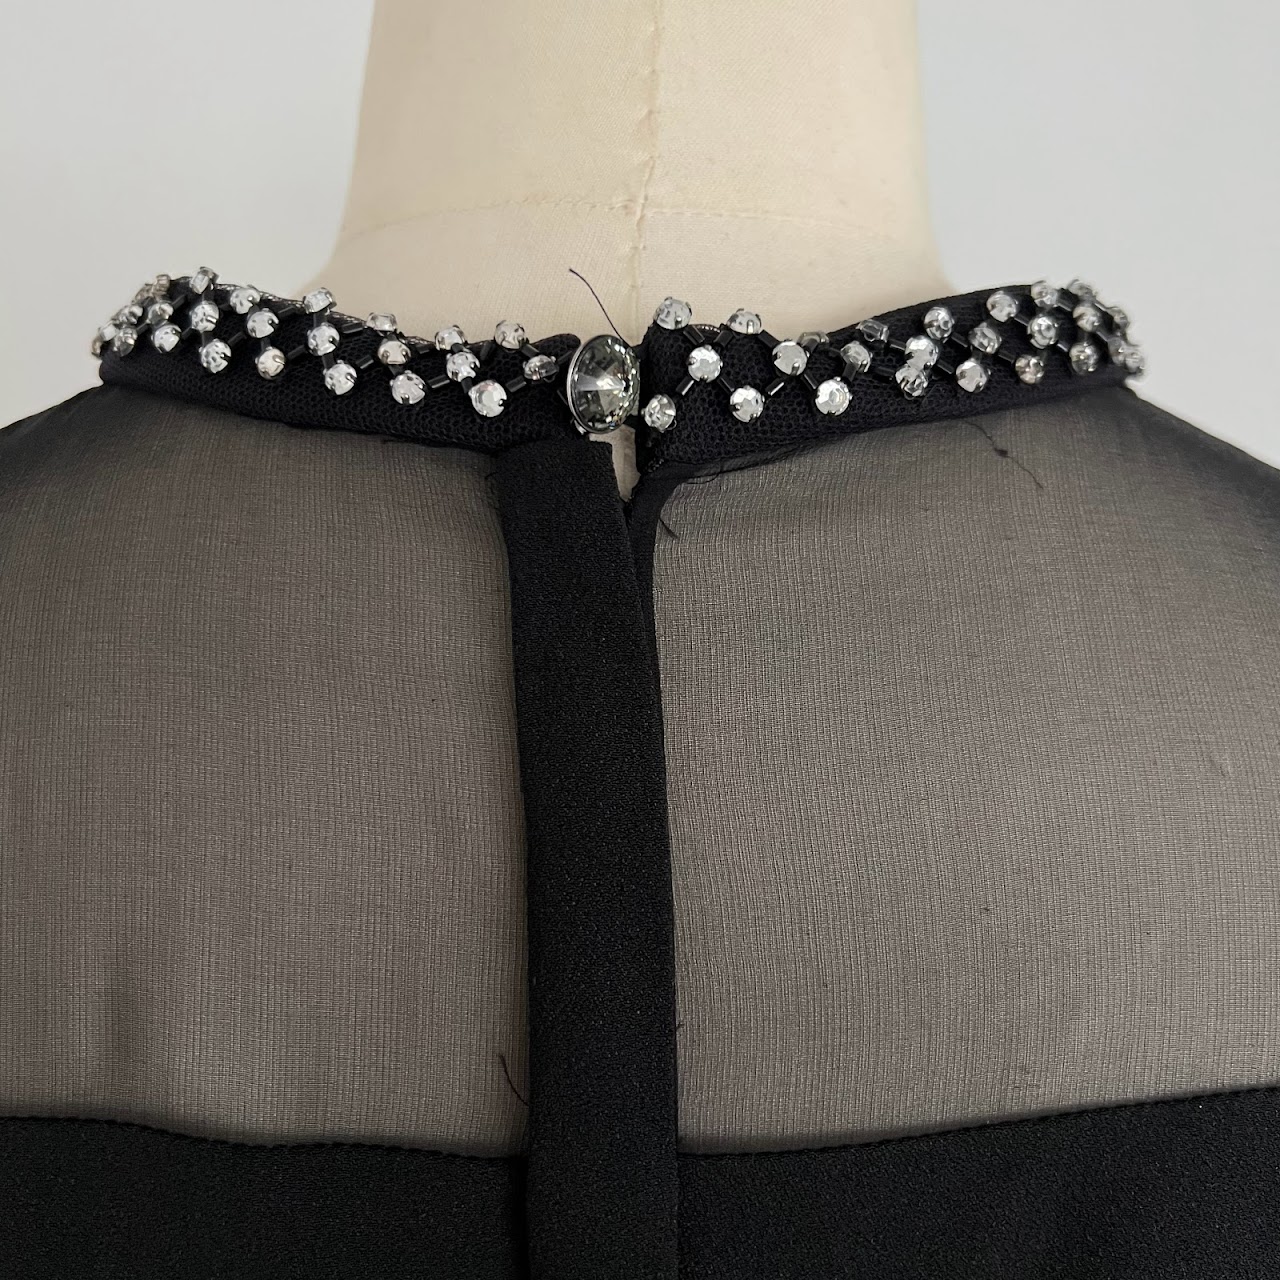 Emilio Pucci Sheer Top Beaded Dress